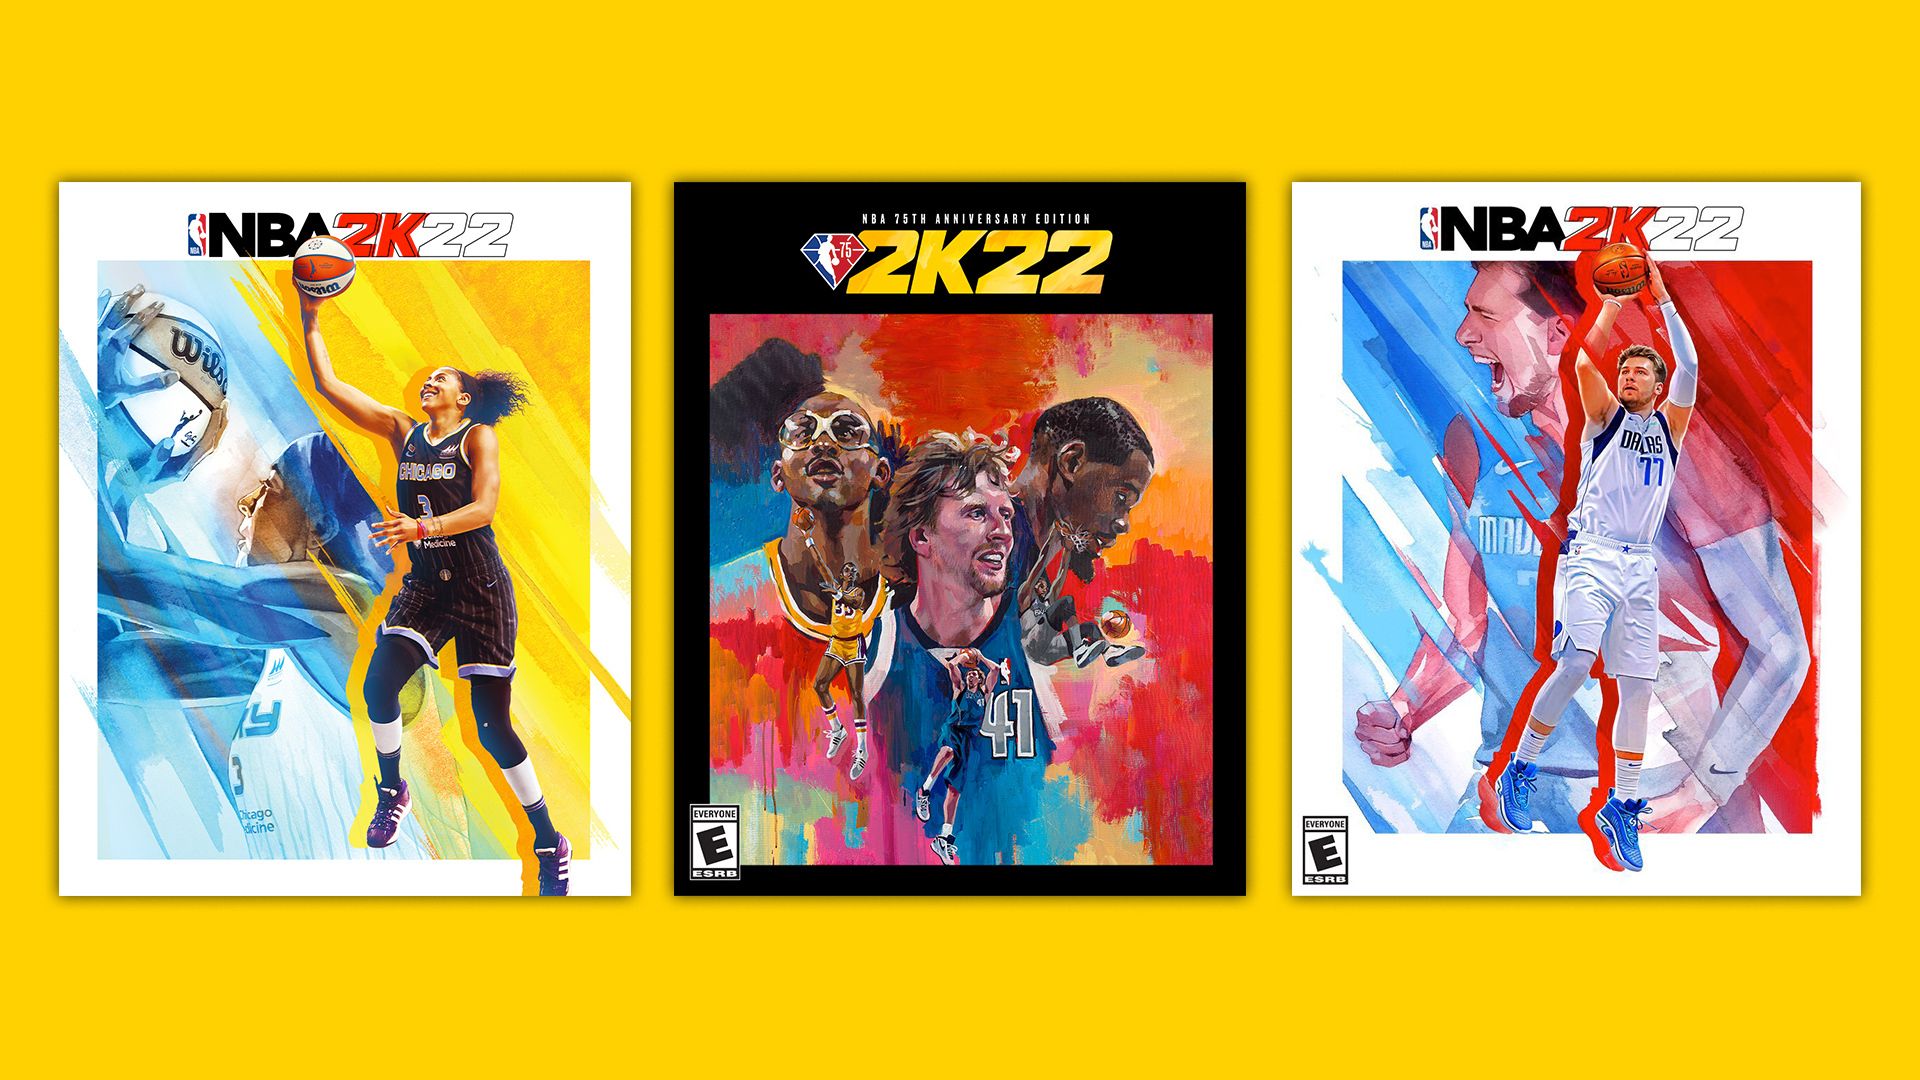 NBA 2K22 covers